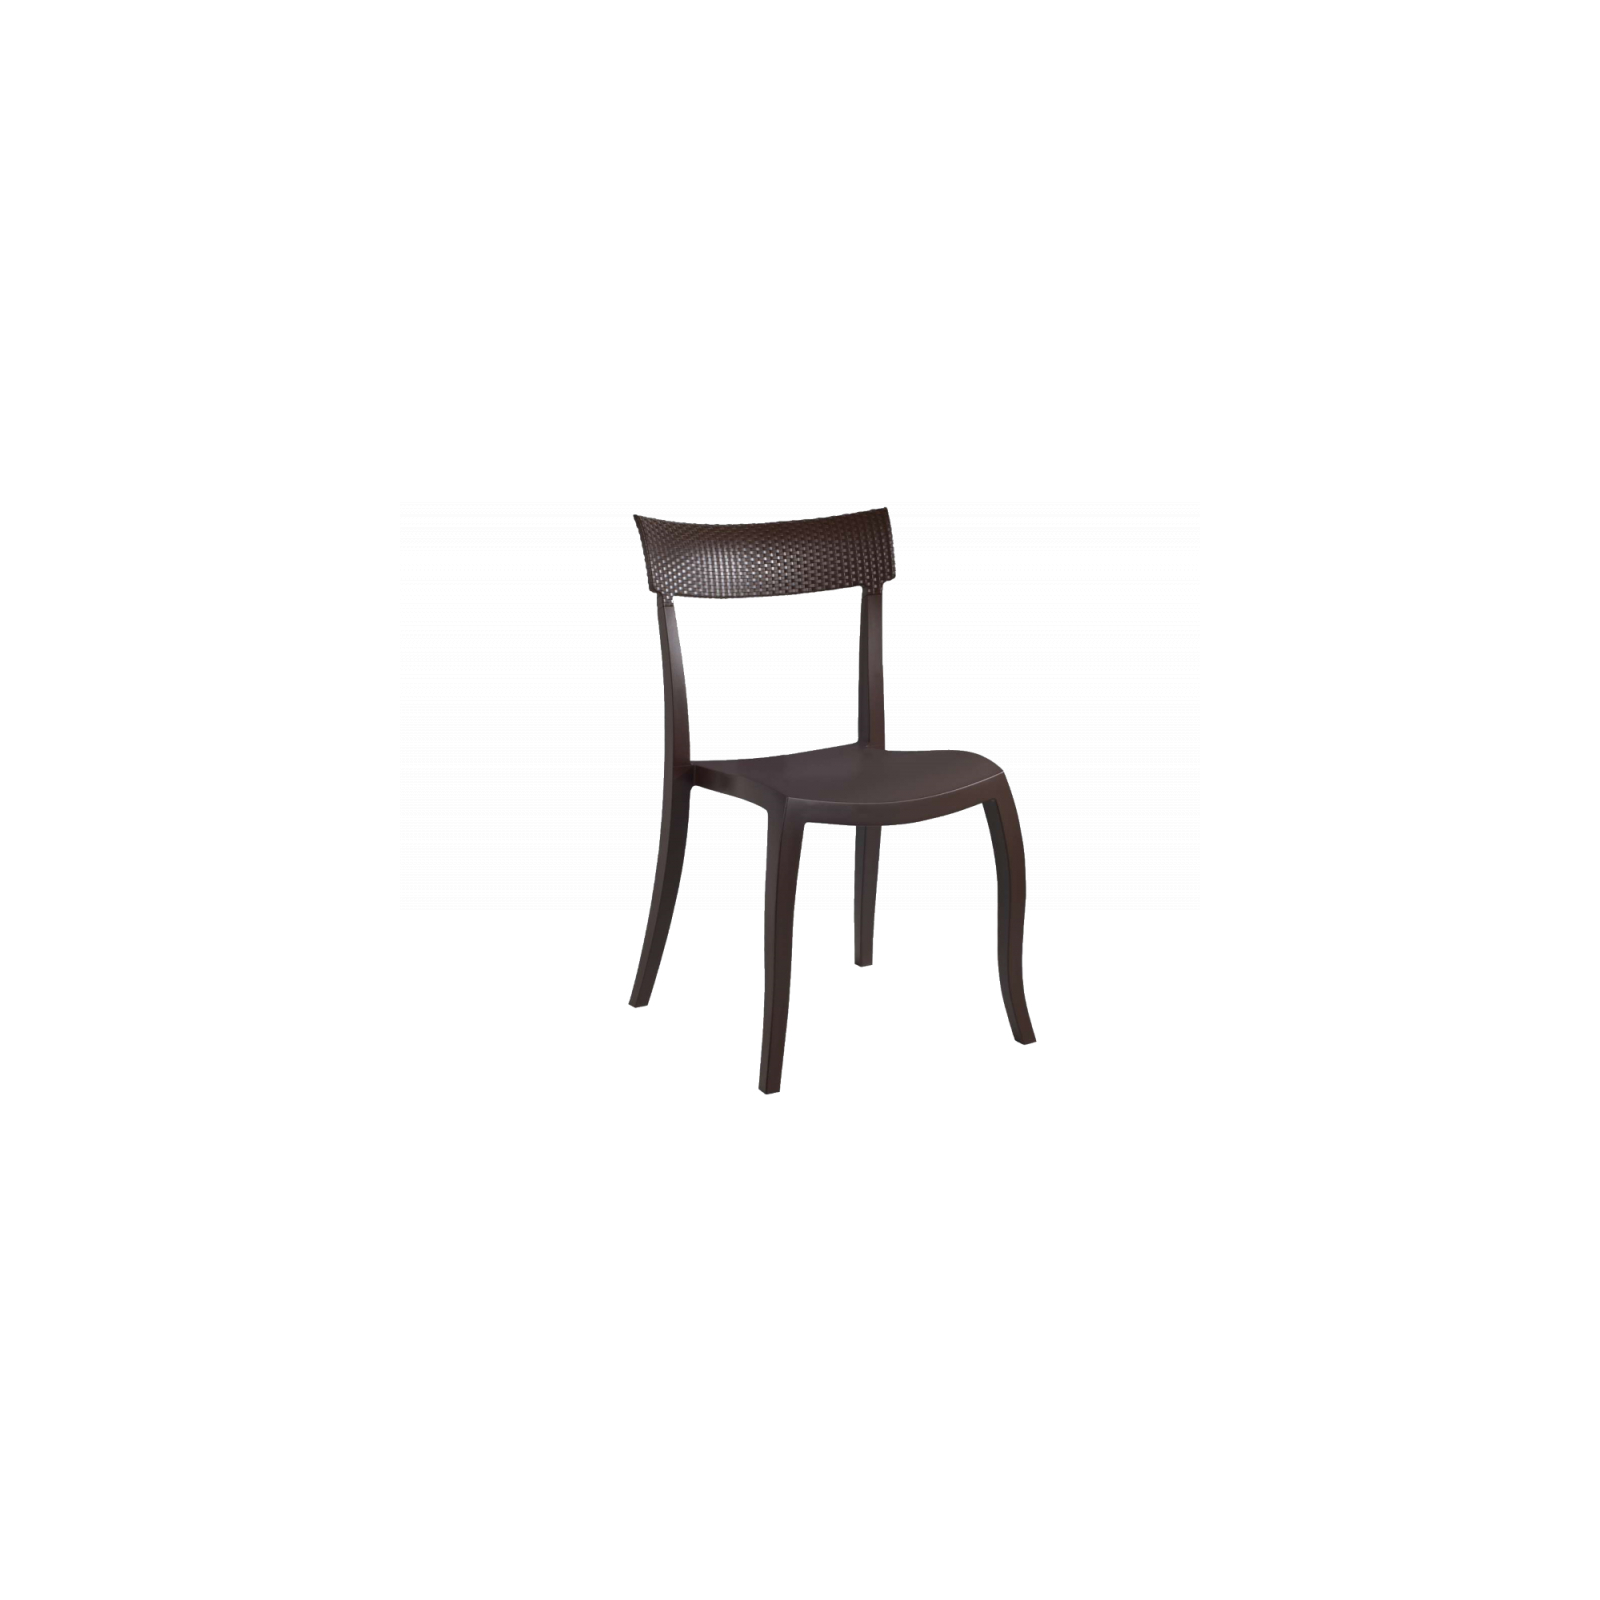 Кухонный стул PAPATYA hera sp под ротанг темно-коричневый (2249)